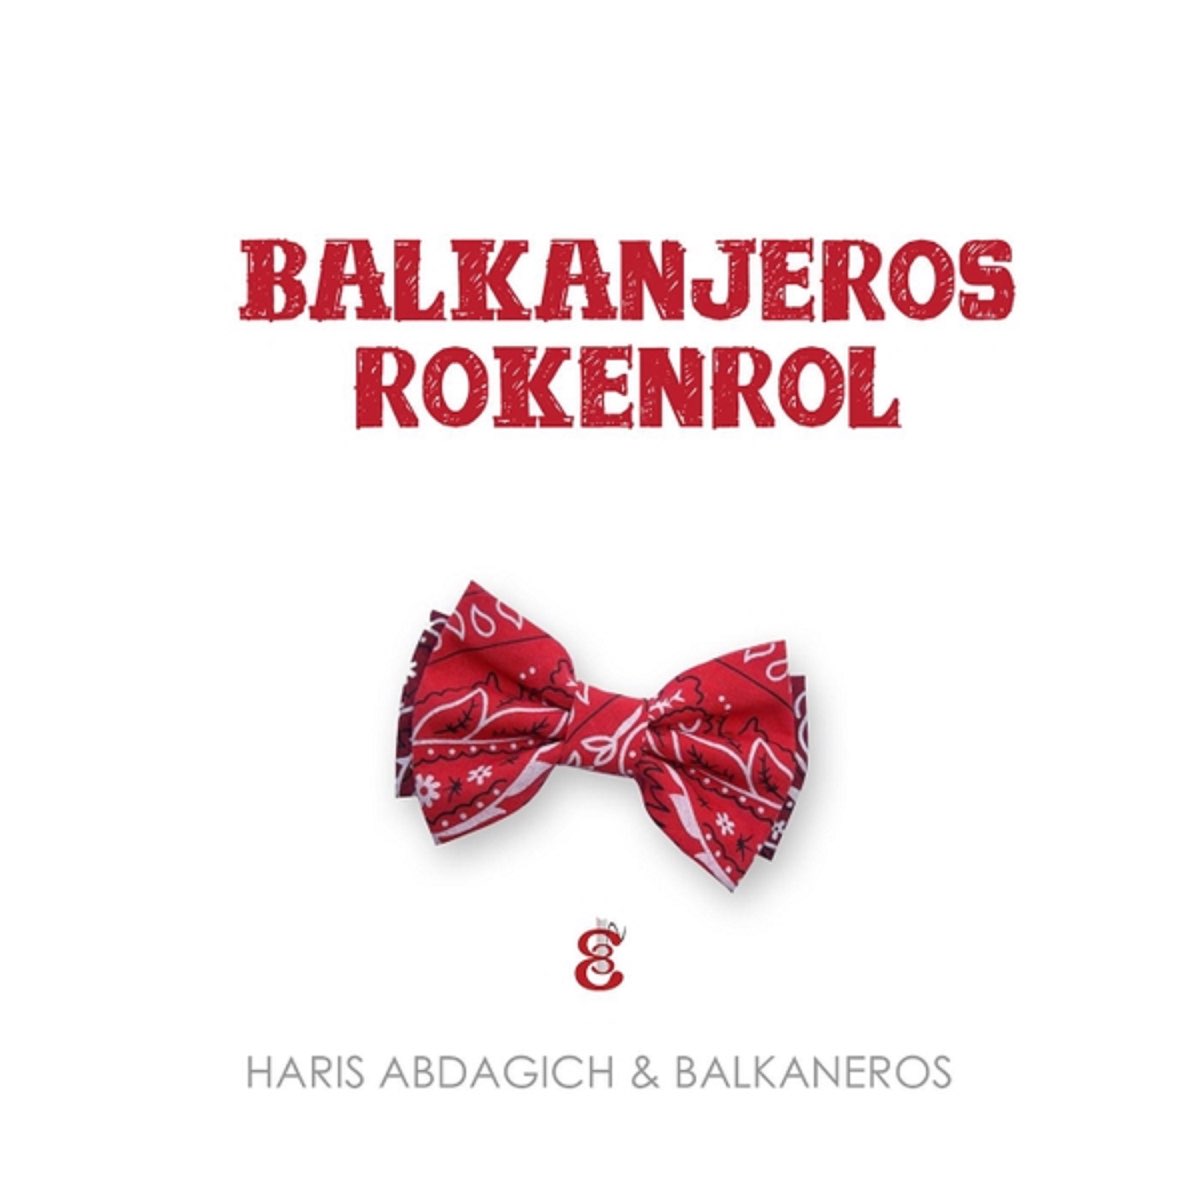 Balkanjeros Rokenrol - Album by Various Artists - Apple Music